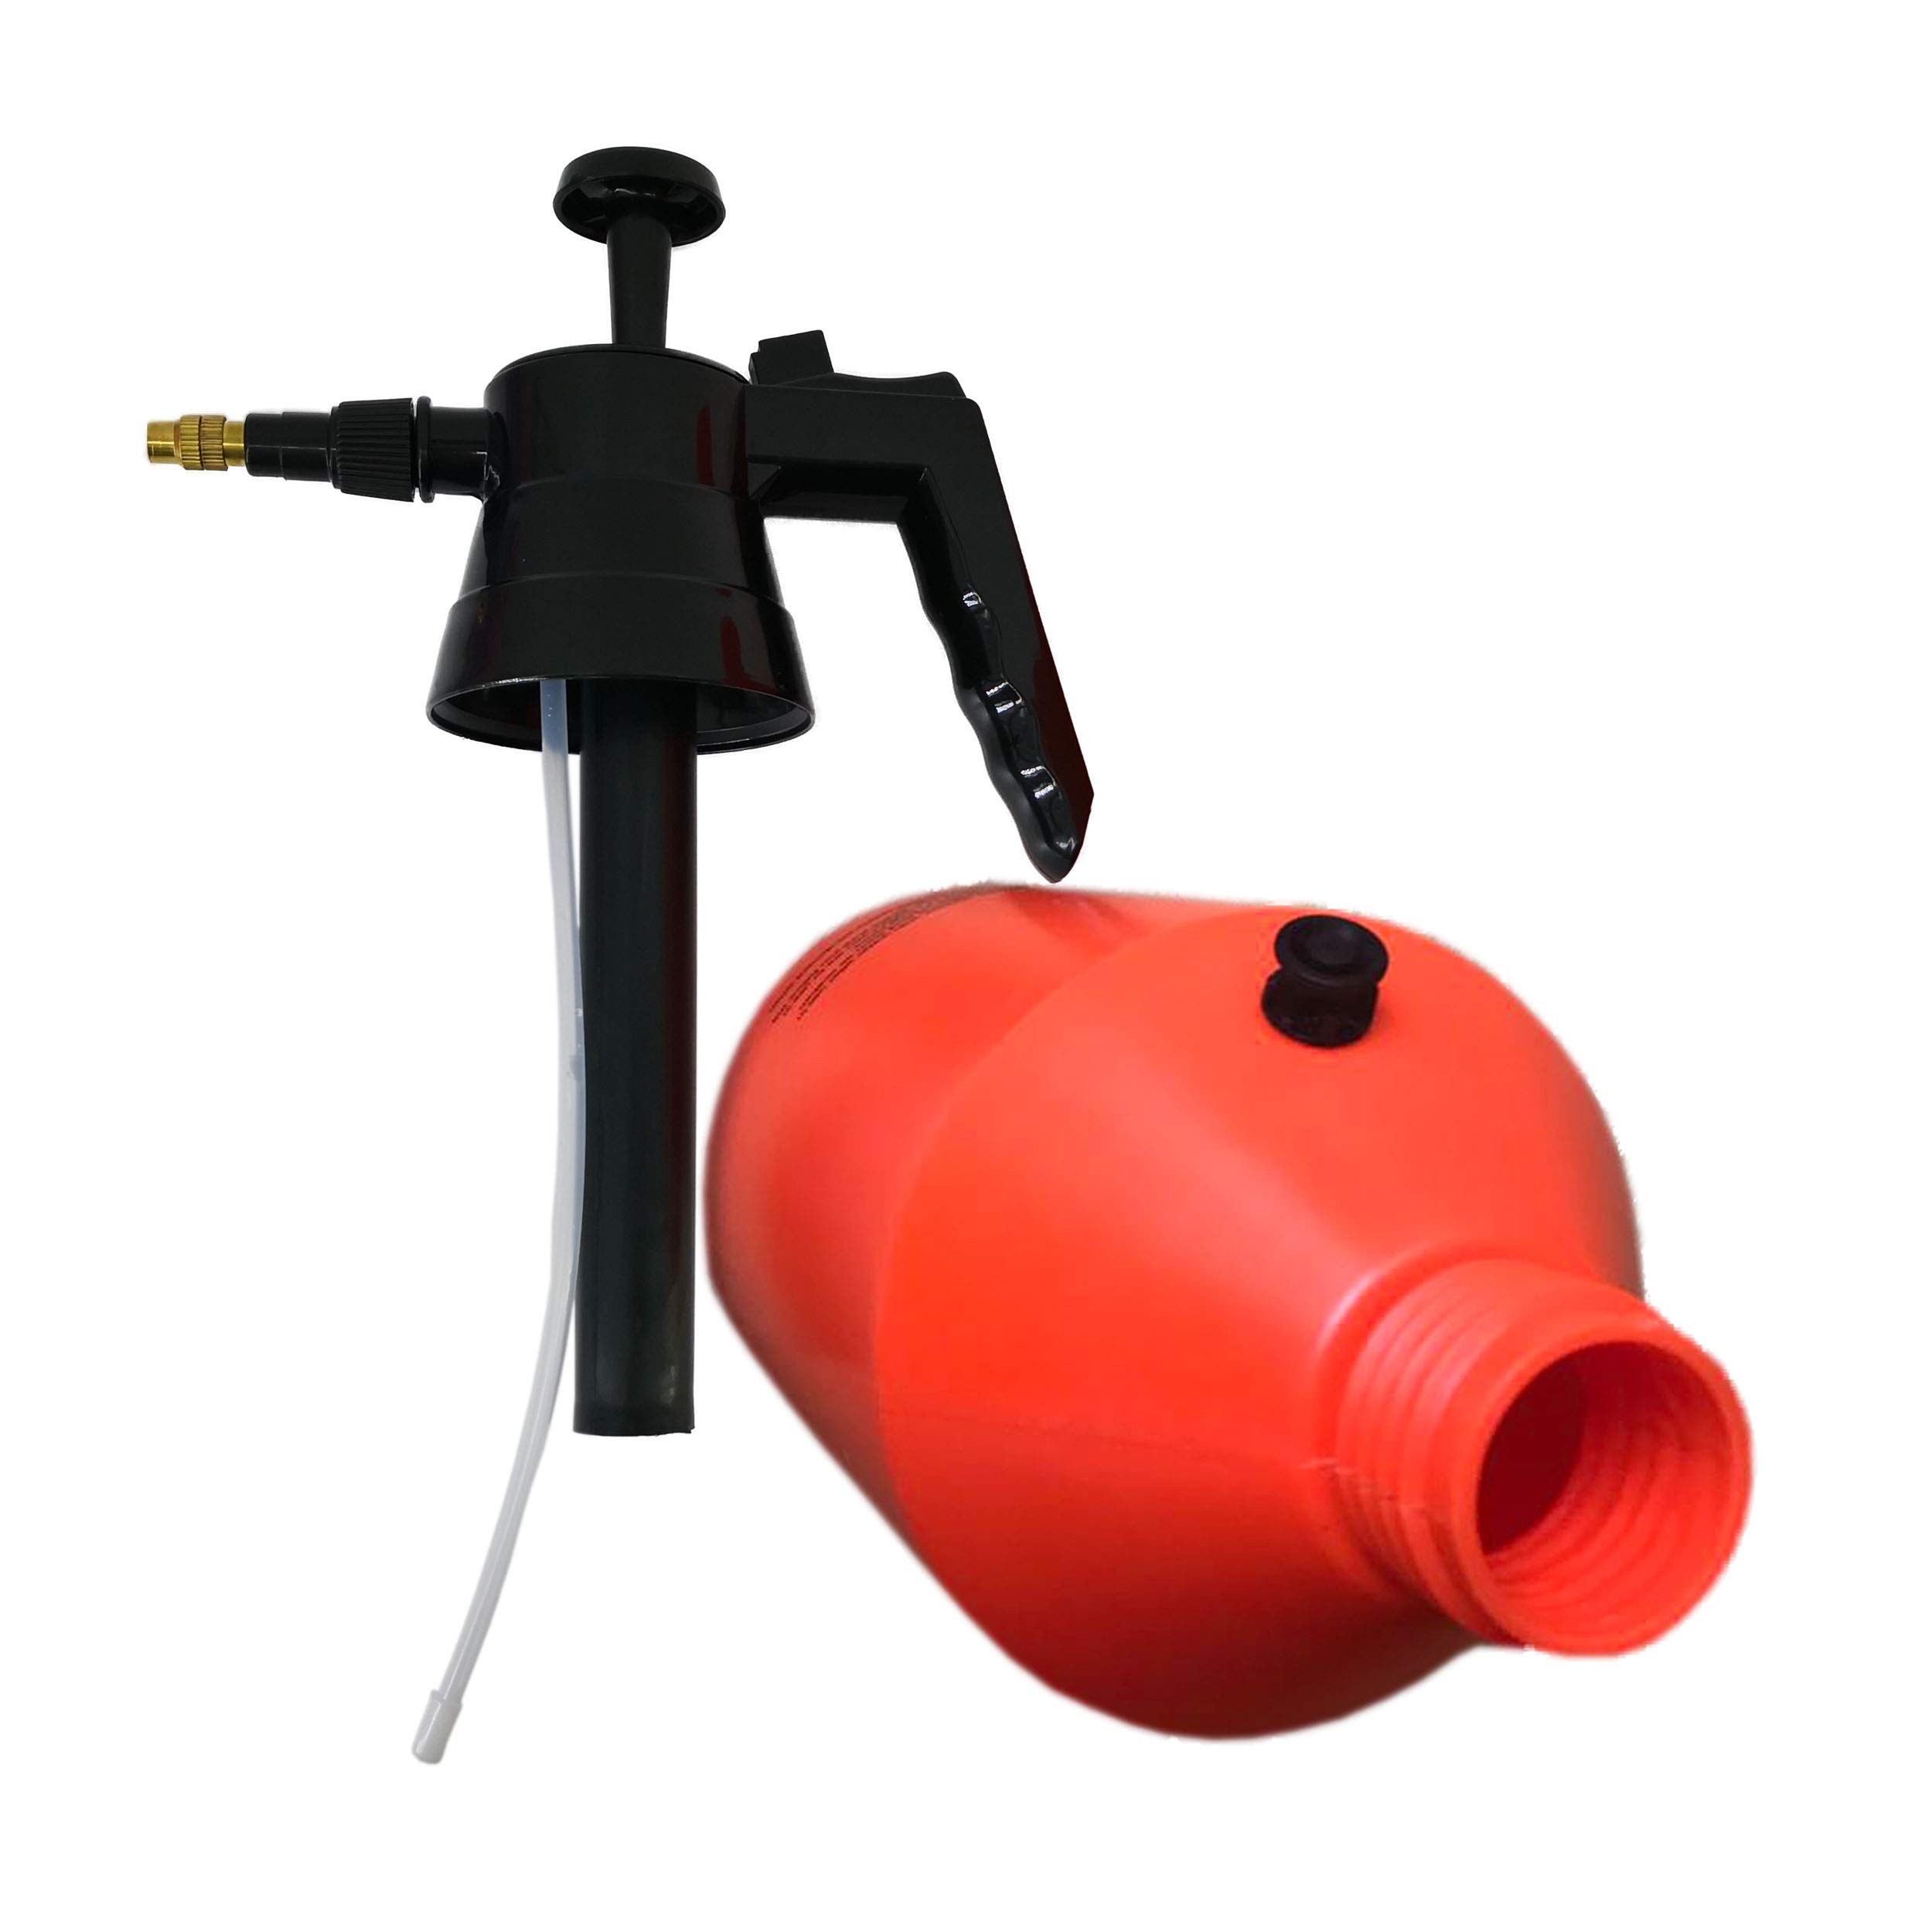 POLYTE One Hand Pressure Sprayer for Lawn, Garden, Pest Control, 50 oz / 1.5 Liter, 1 Pack